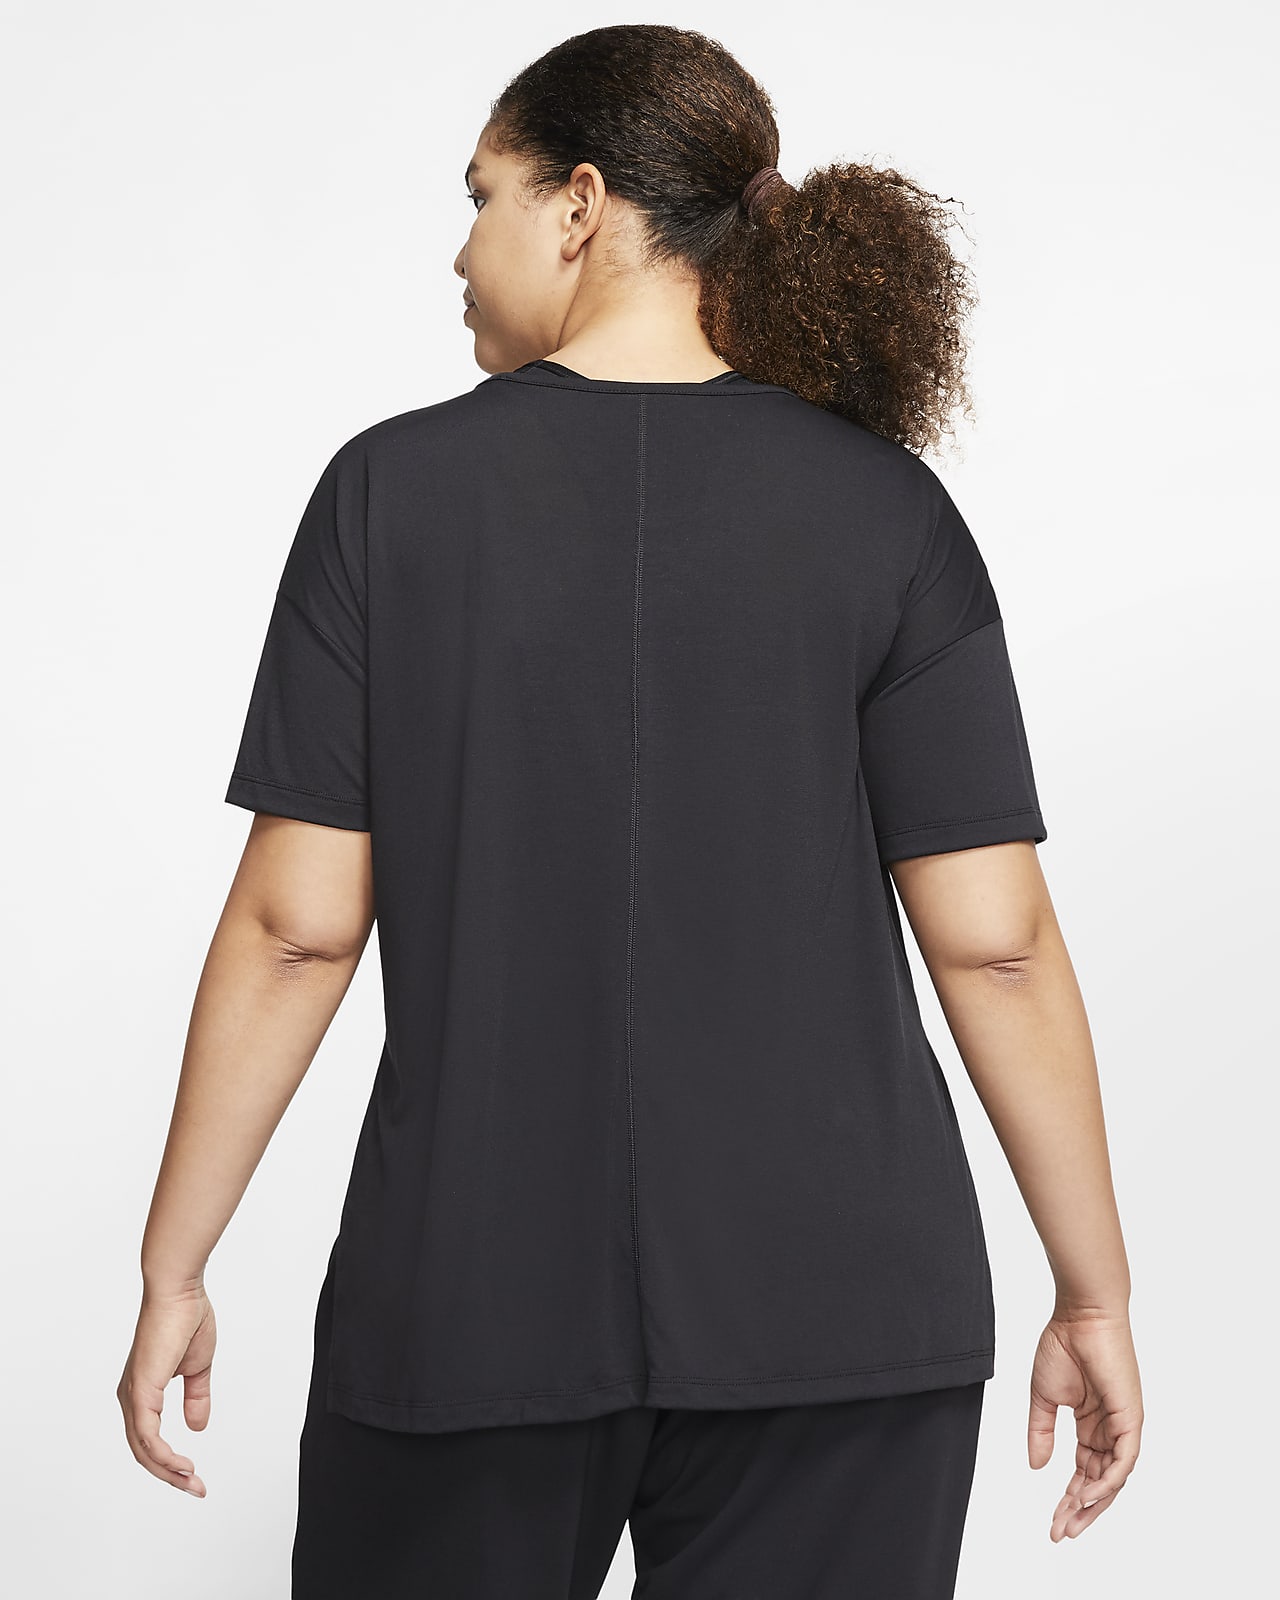 Nike Yoga Women's Short-Sleeve Top (Plus Size). Nike CA